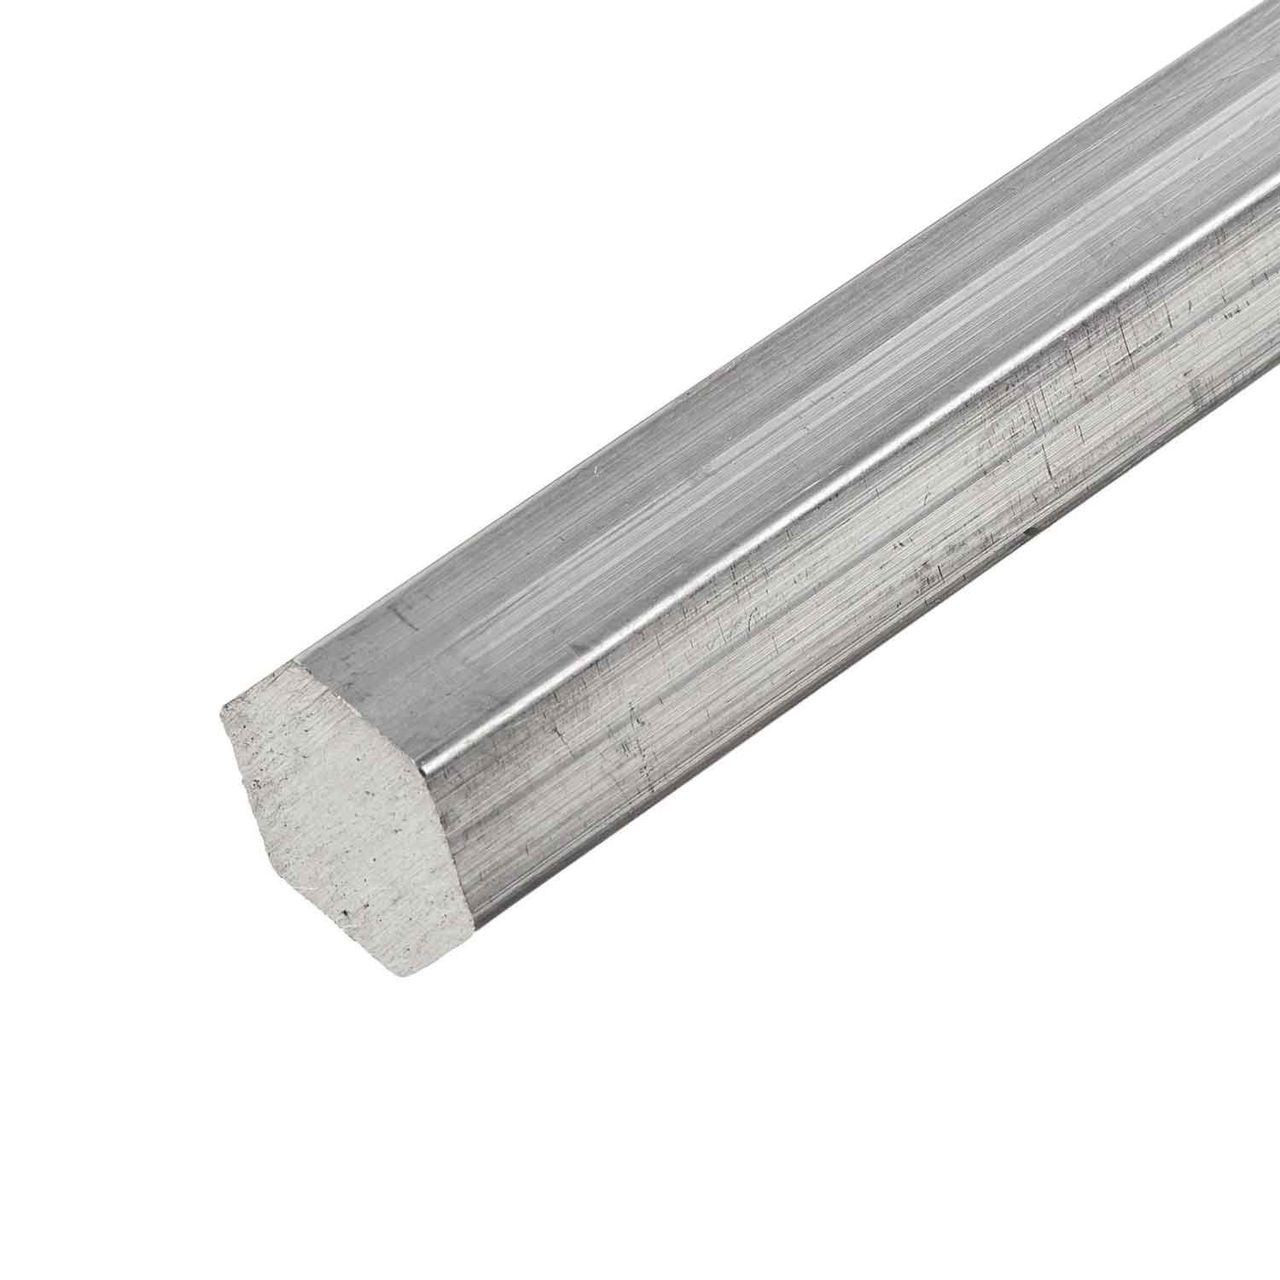 0.625 (5/8 inch) x 17 inches, 2024-T351 Aluminum Hexagon Bar